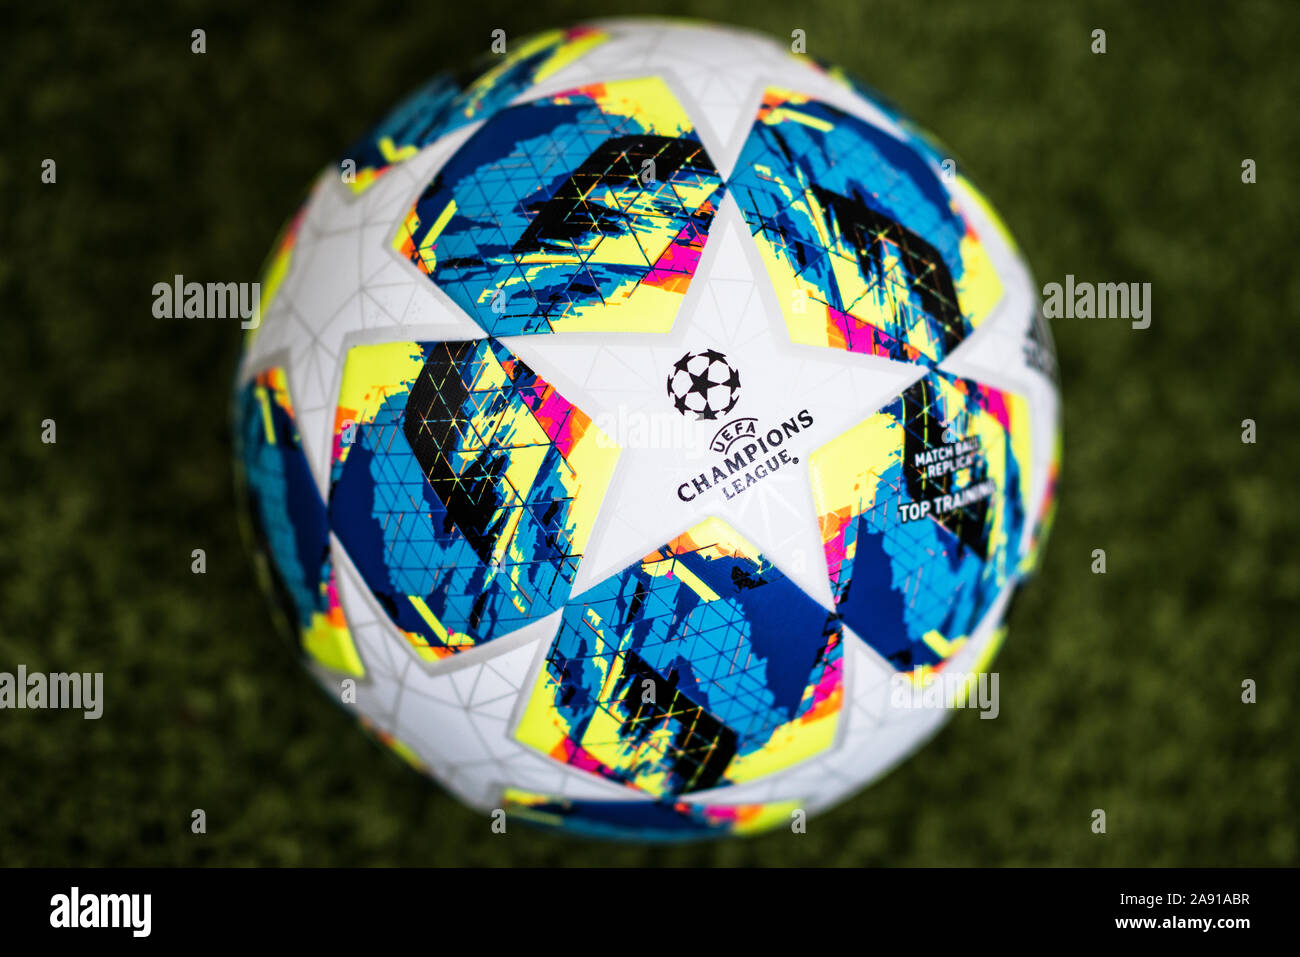 Close up of 2019/20 Adidas Champions League Football. Stock Photo